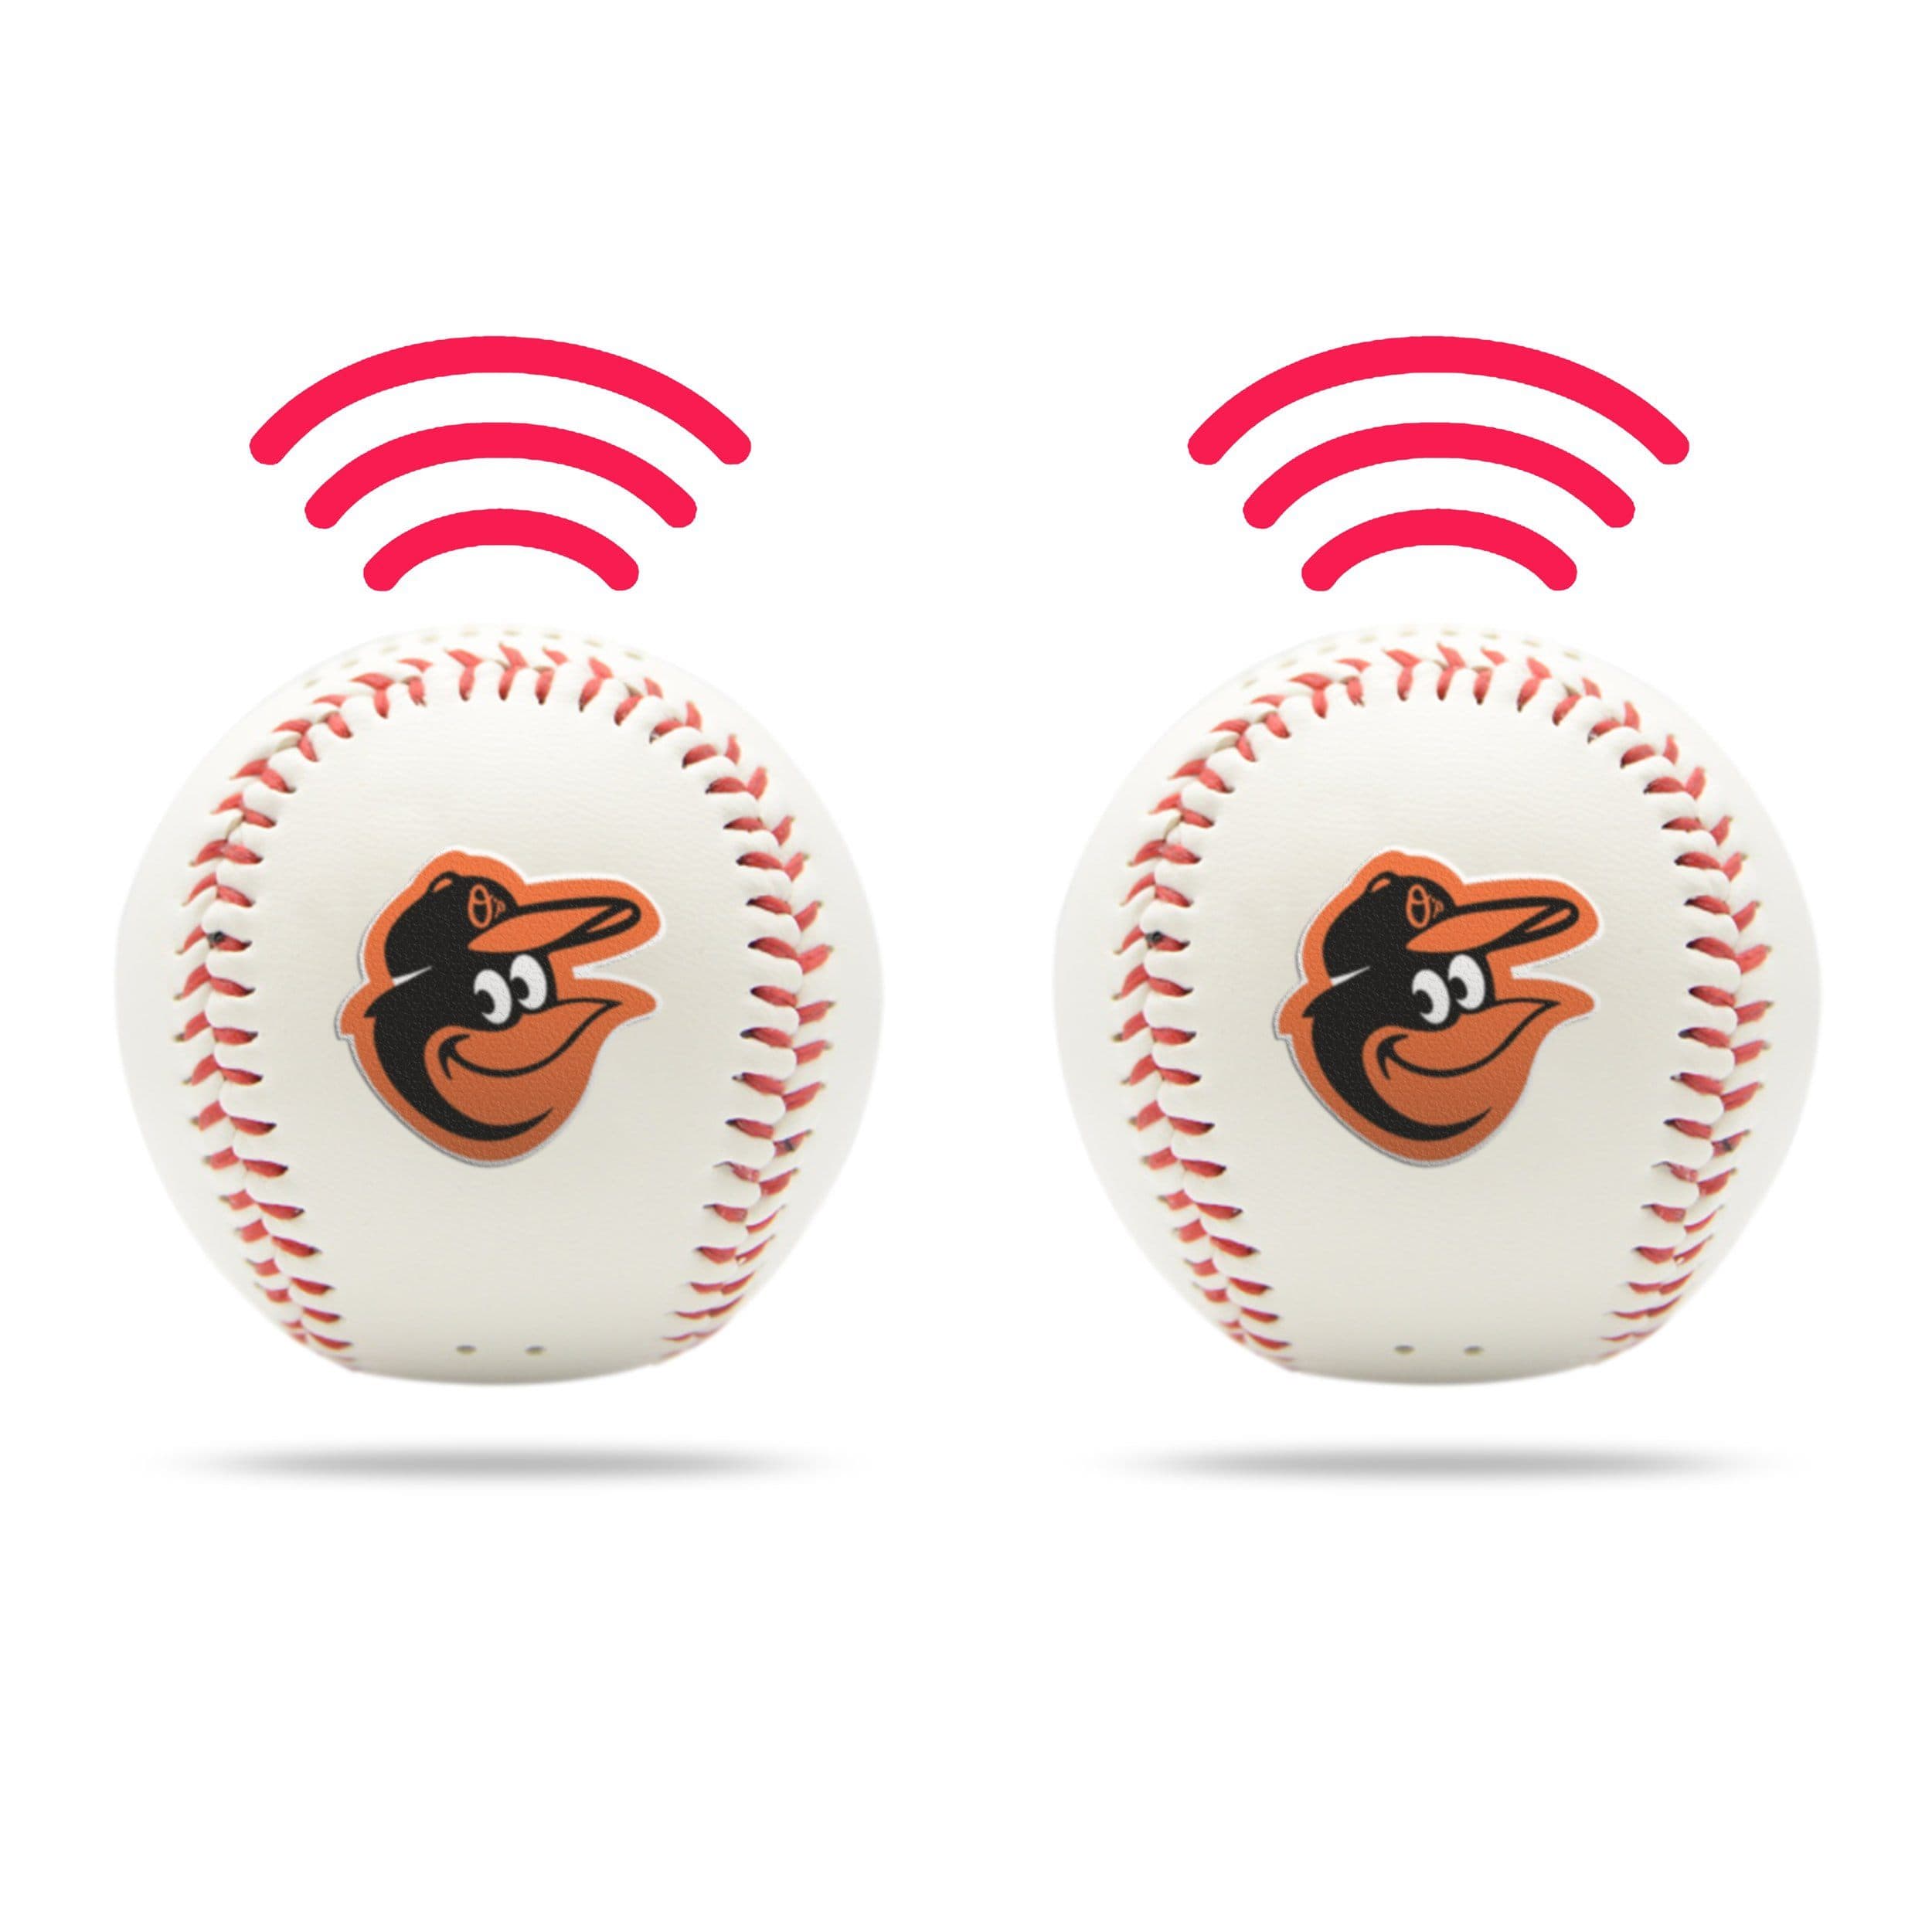 Baltimore Orioles Baseball Bluetooth Speaker - NIMA Speakers